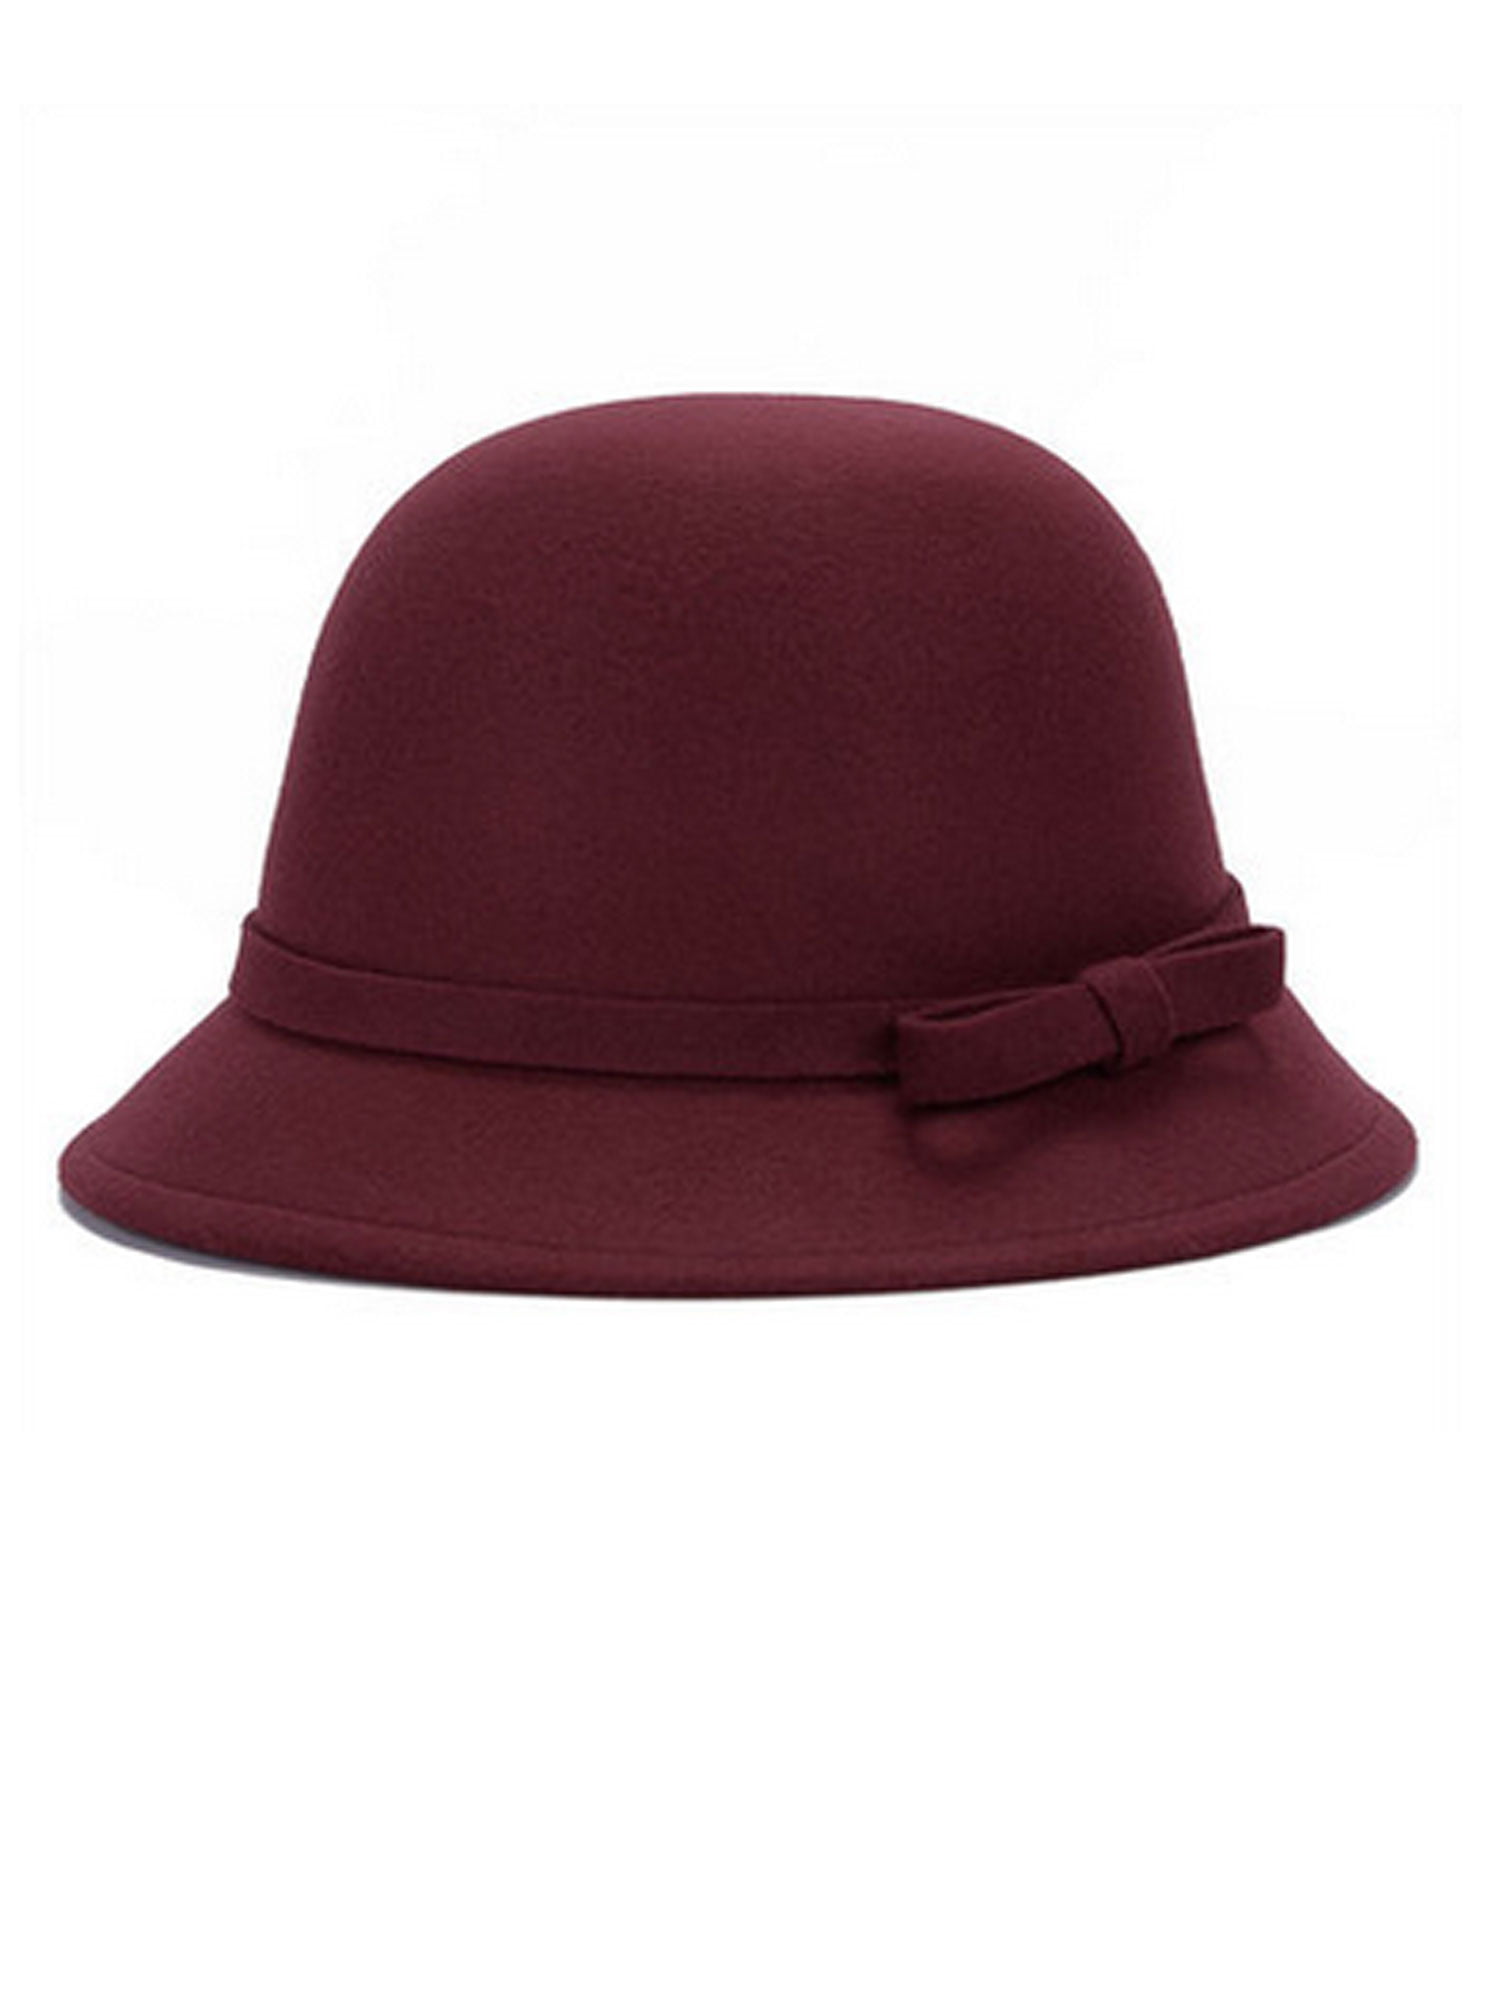 Womens Ladies Winter Vintage Elegant Wool Bow-knot Felt Hat Cloche Bucket Cap 